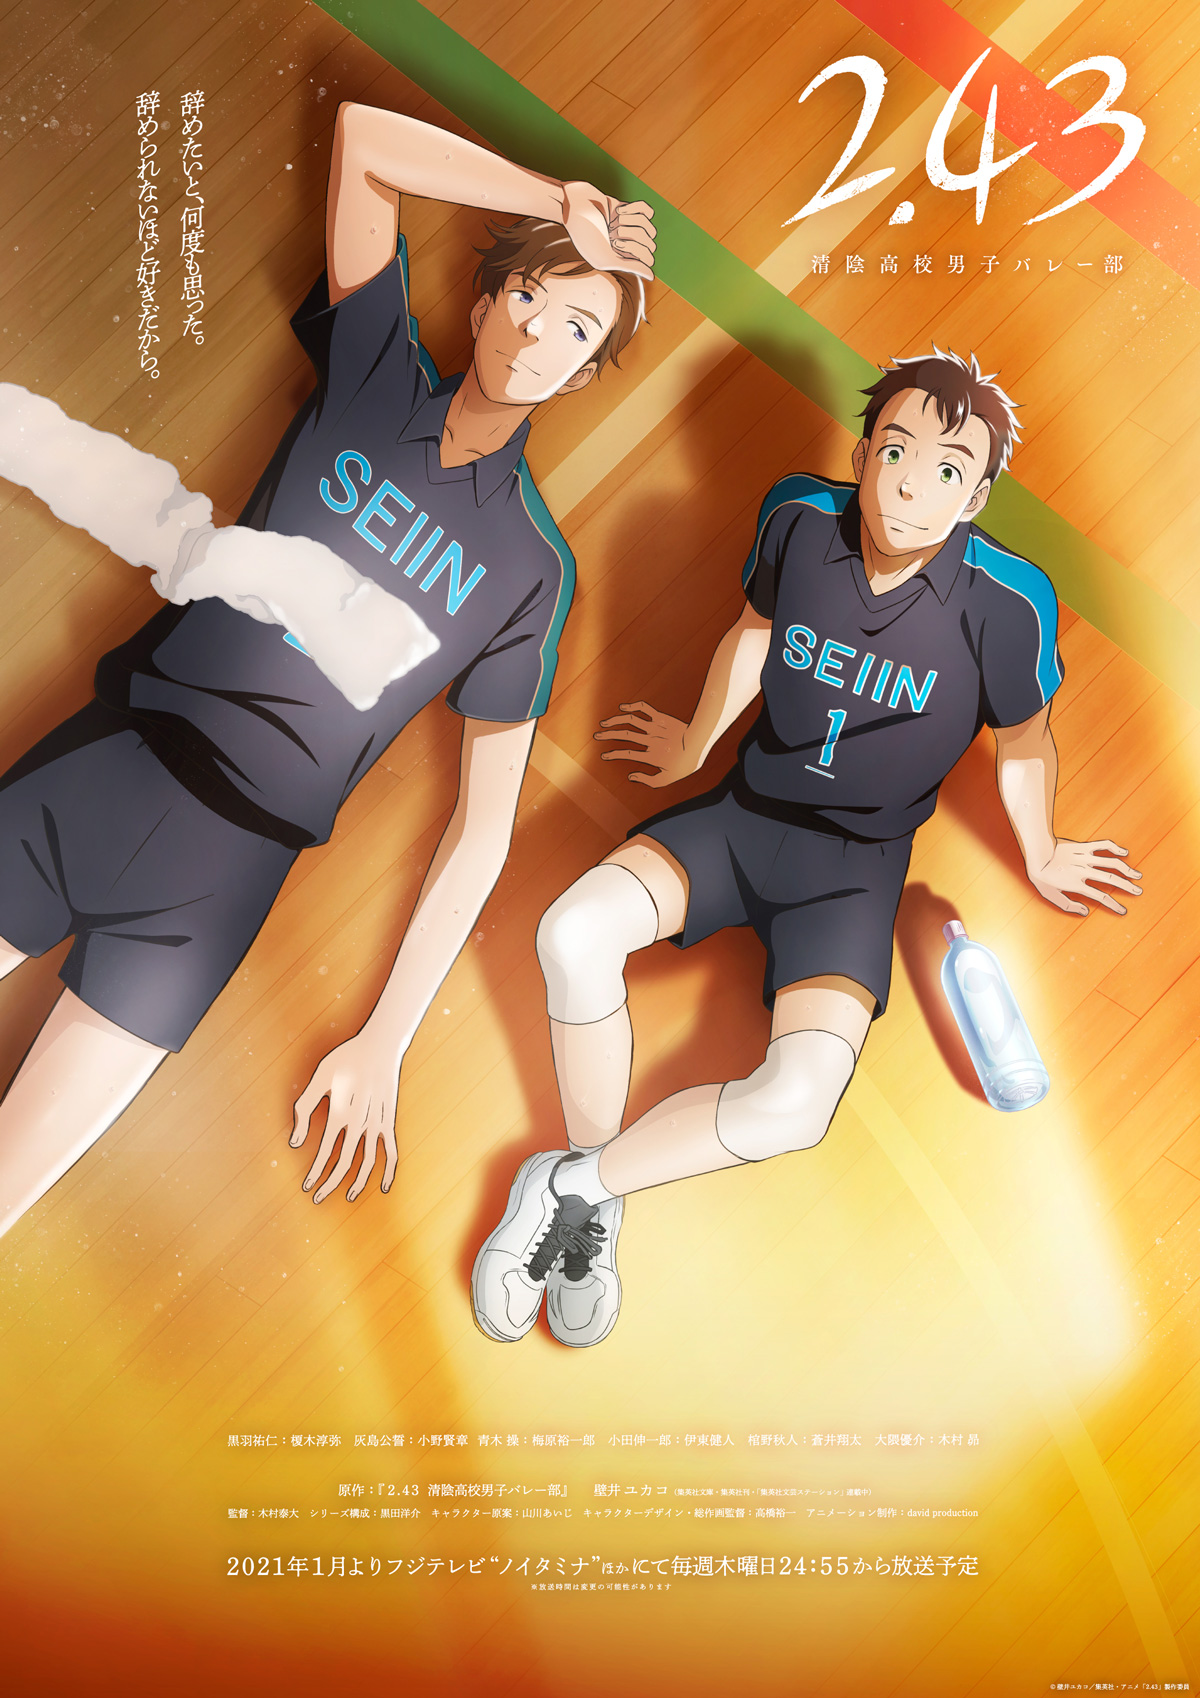 El Anime 243 Seiin Koukou Danshi Volley Bu Revela Un Nuevo Visual